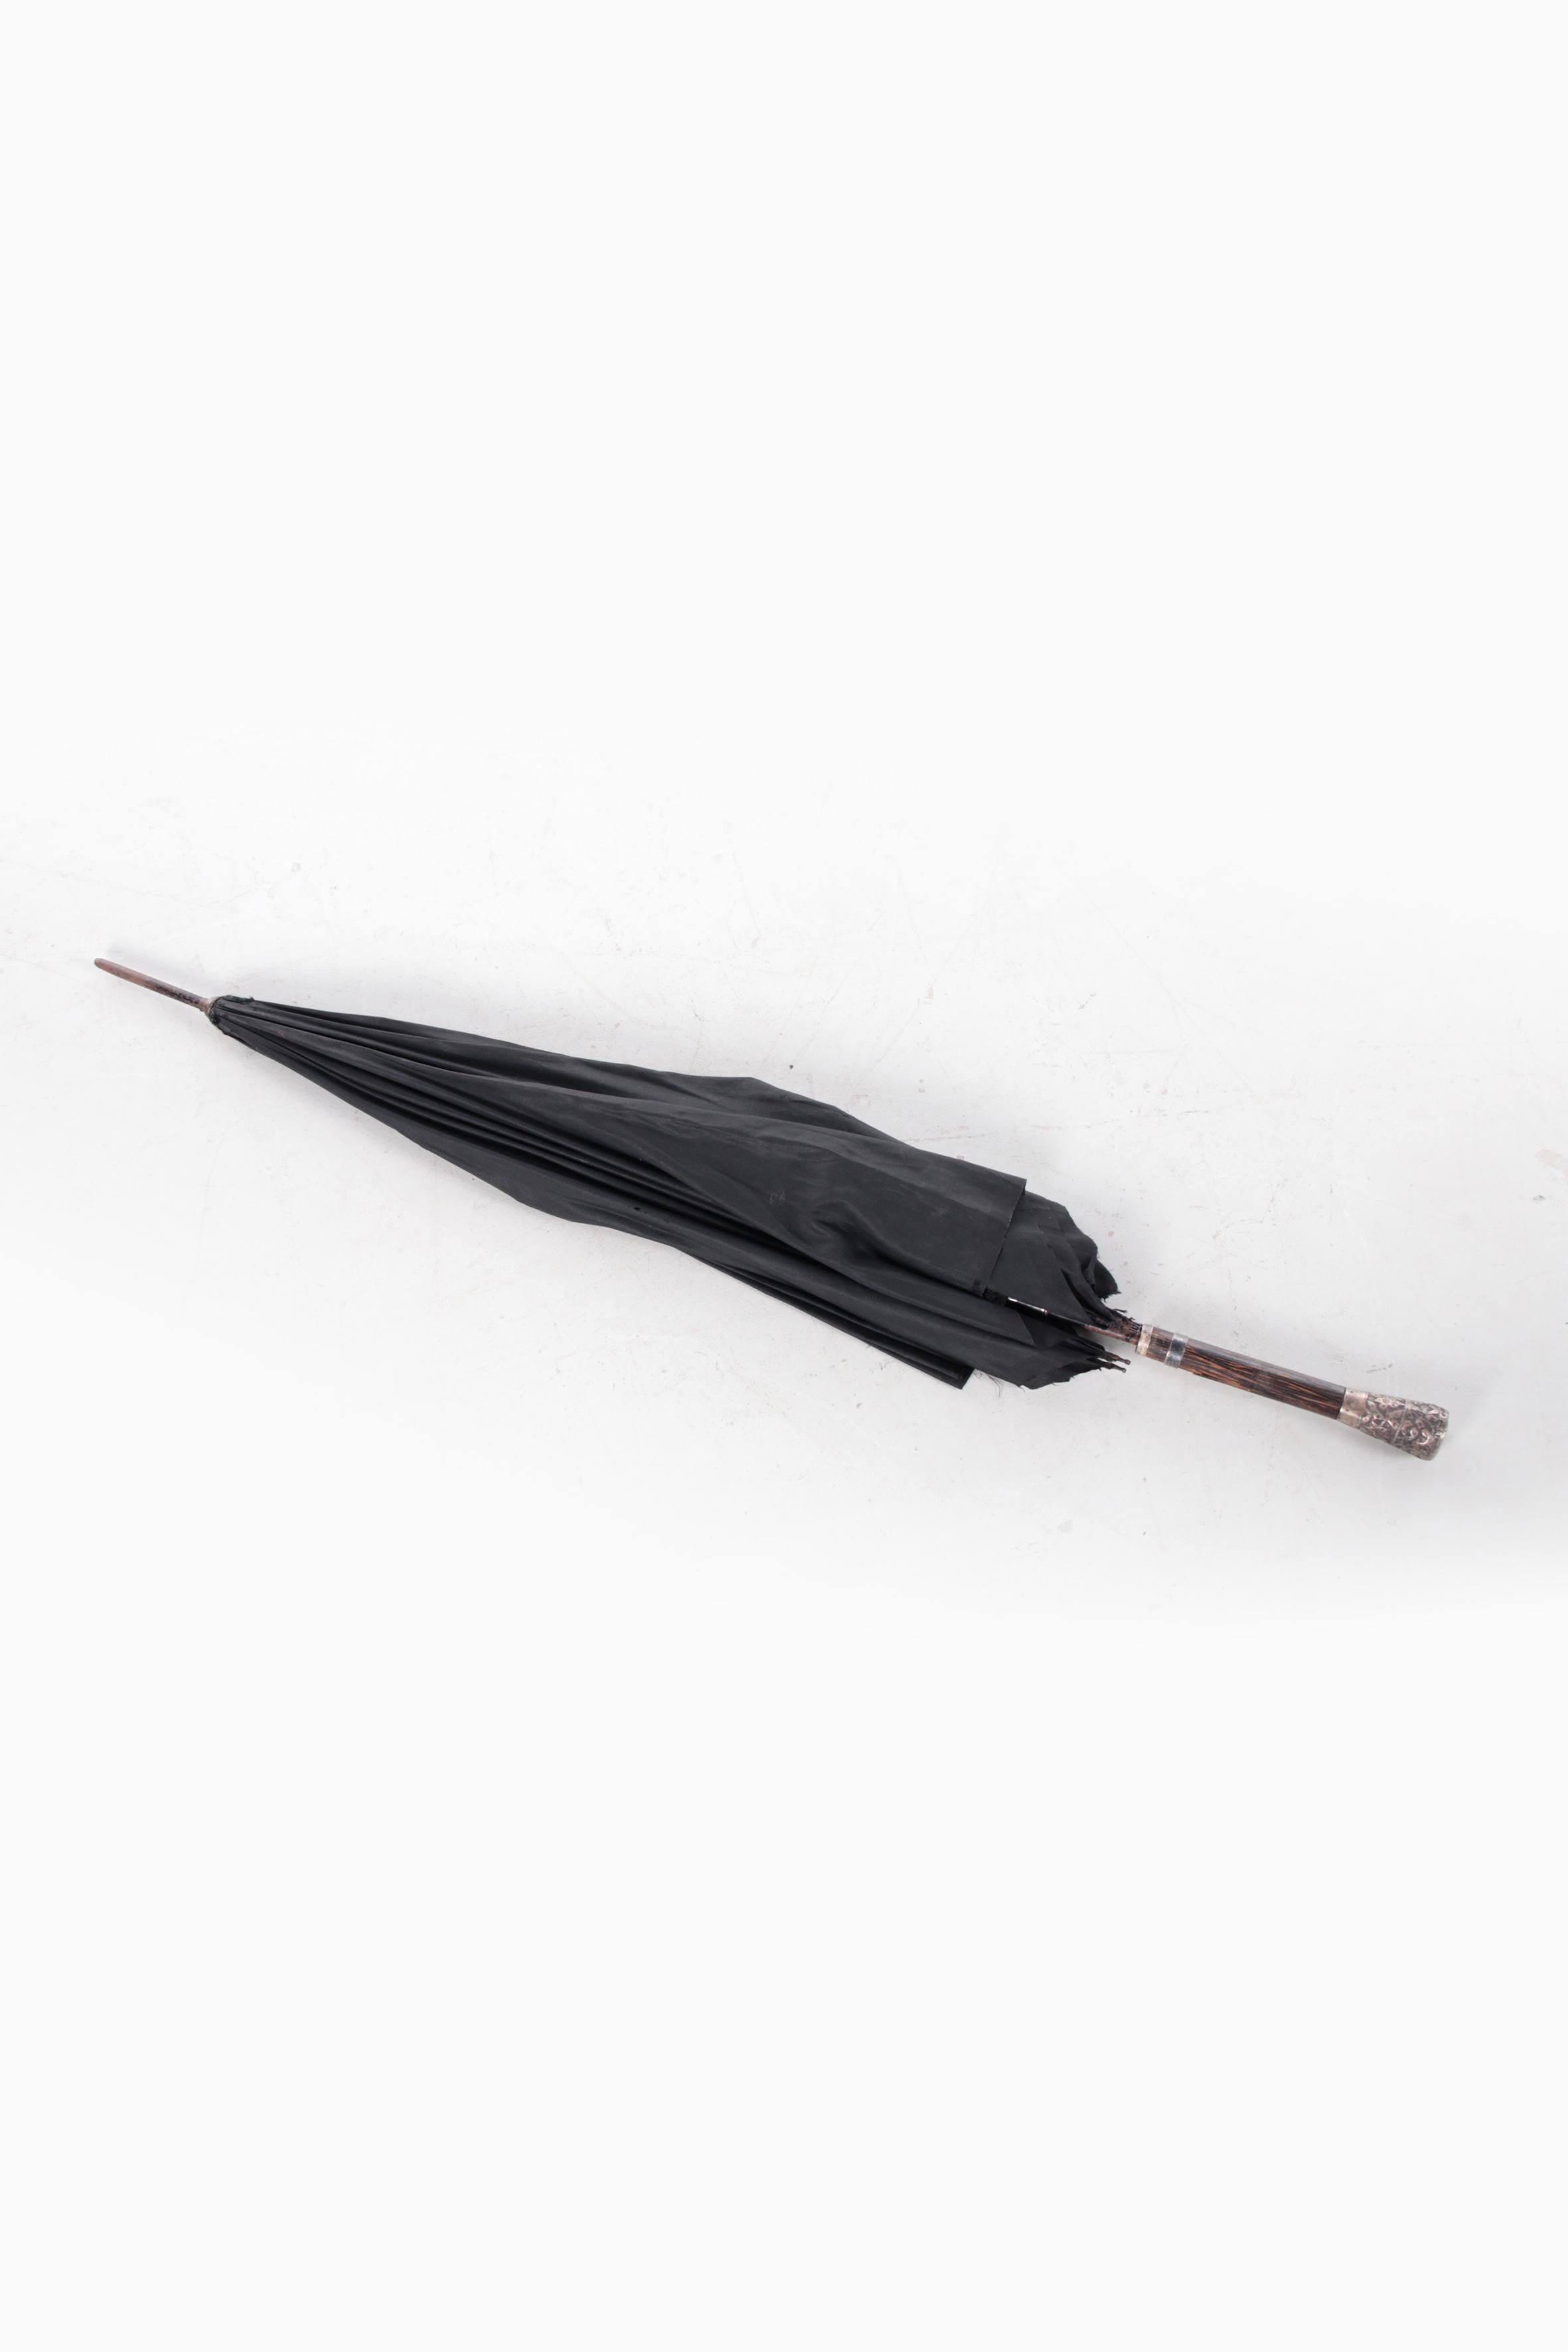 Antique France Black Silk Umbrella with France Silver Handle For Sale 12